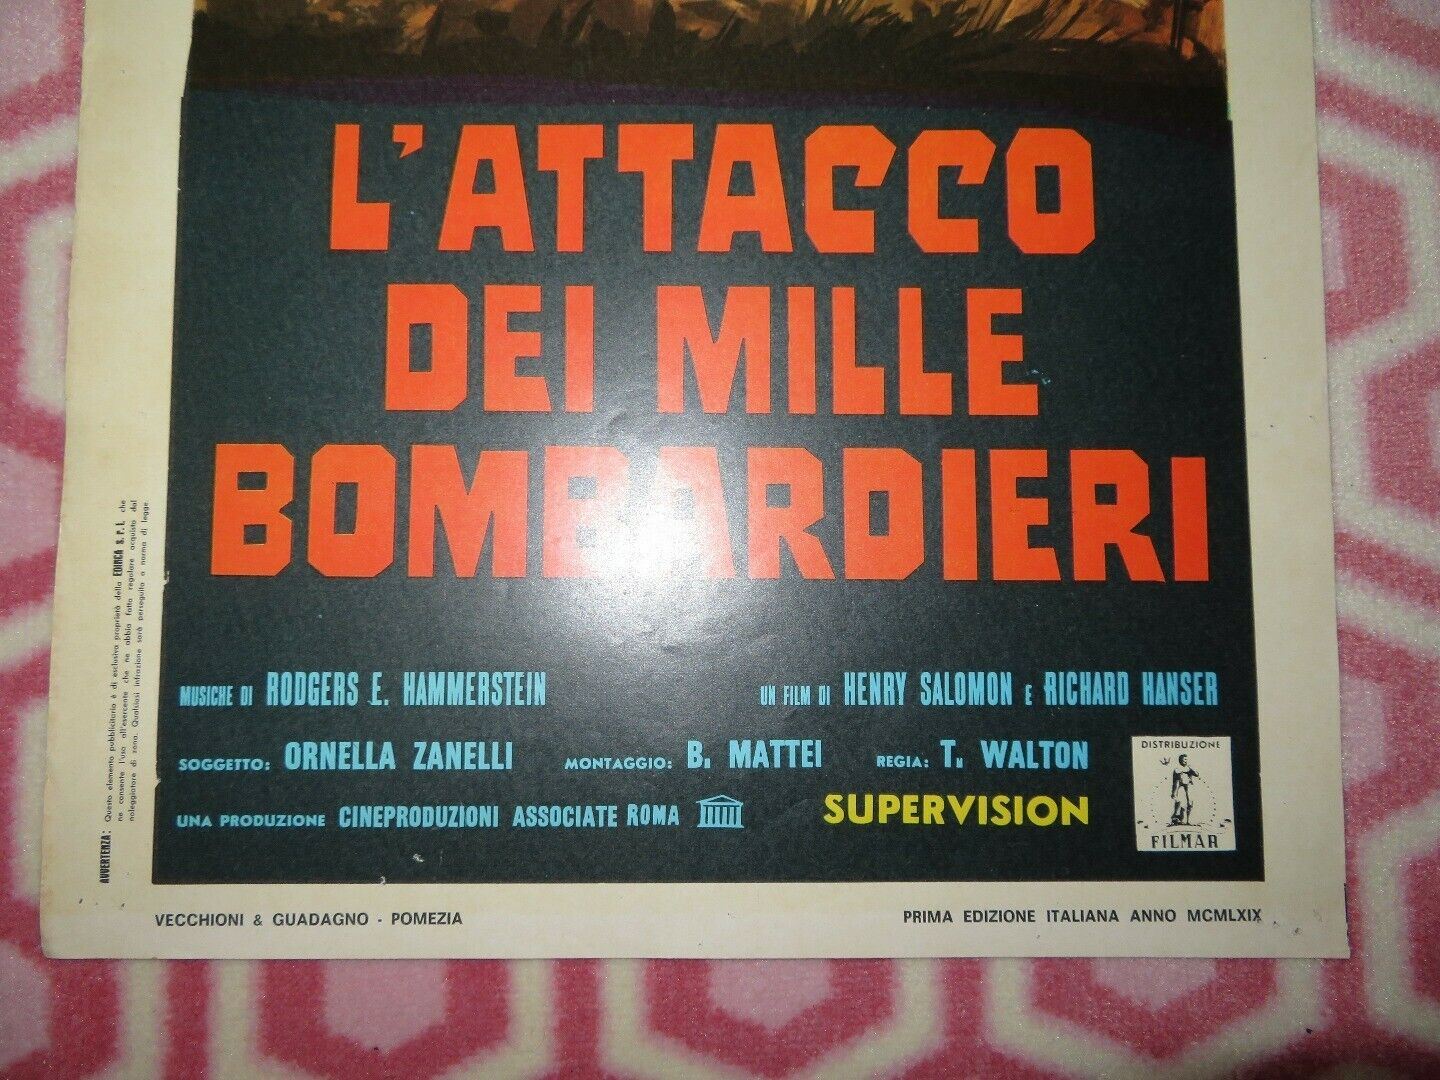 The Attack of 1000 Bombers ITALIAN LOCANDINA (27.5"x 13") POSTER HENRY SALOMOM